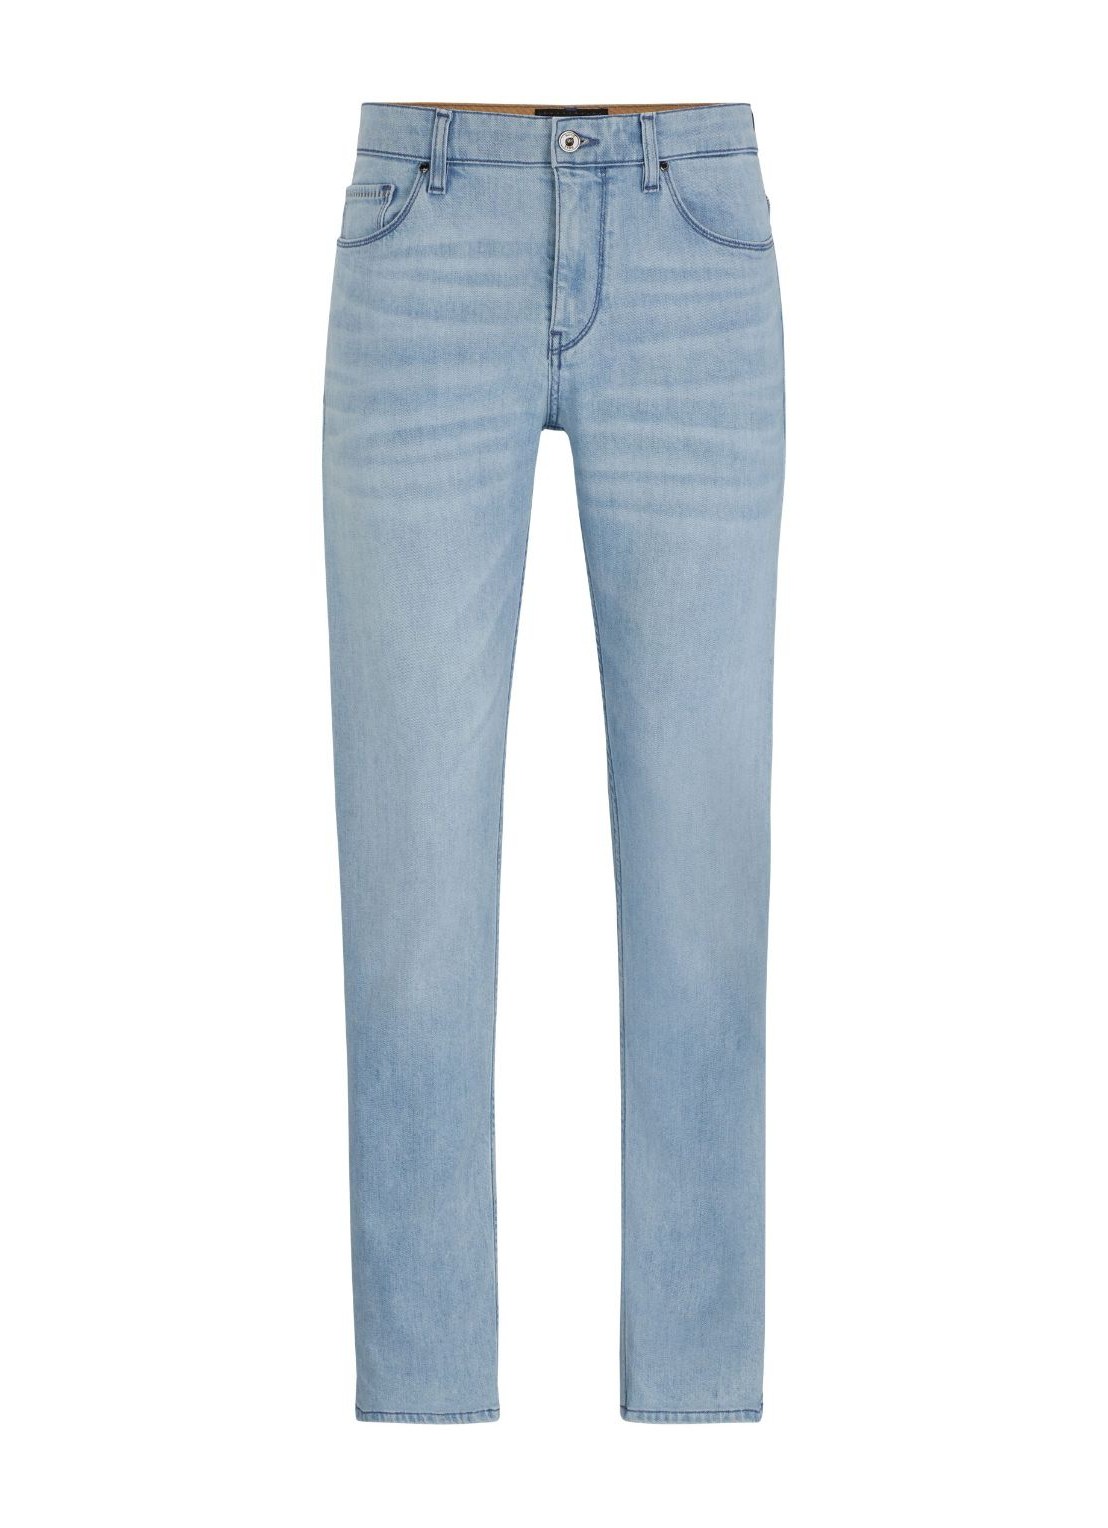 Pantalon jeans boss denim manl-delaware - 50513023 445 talla 33
 